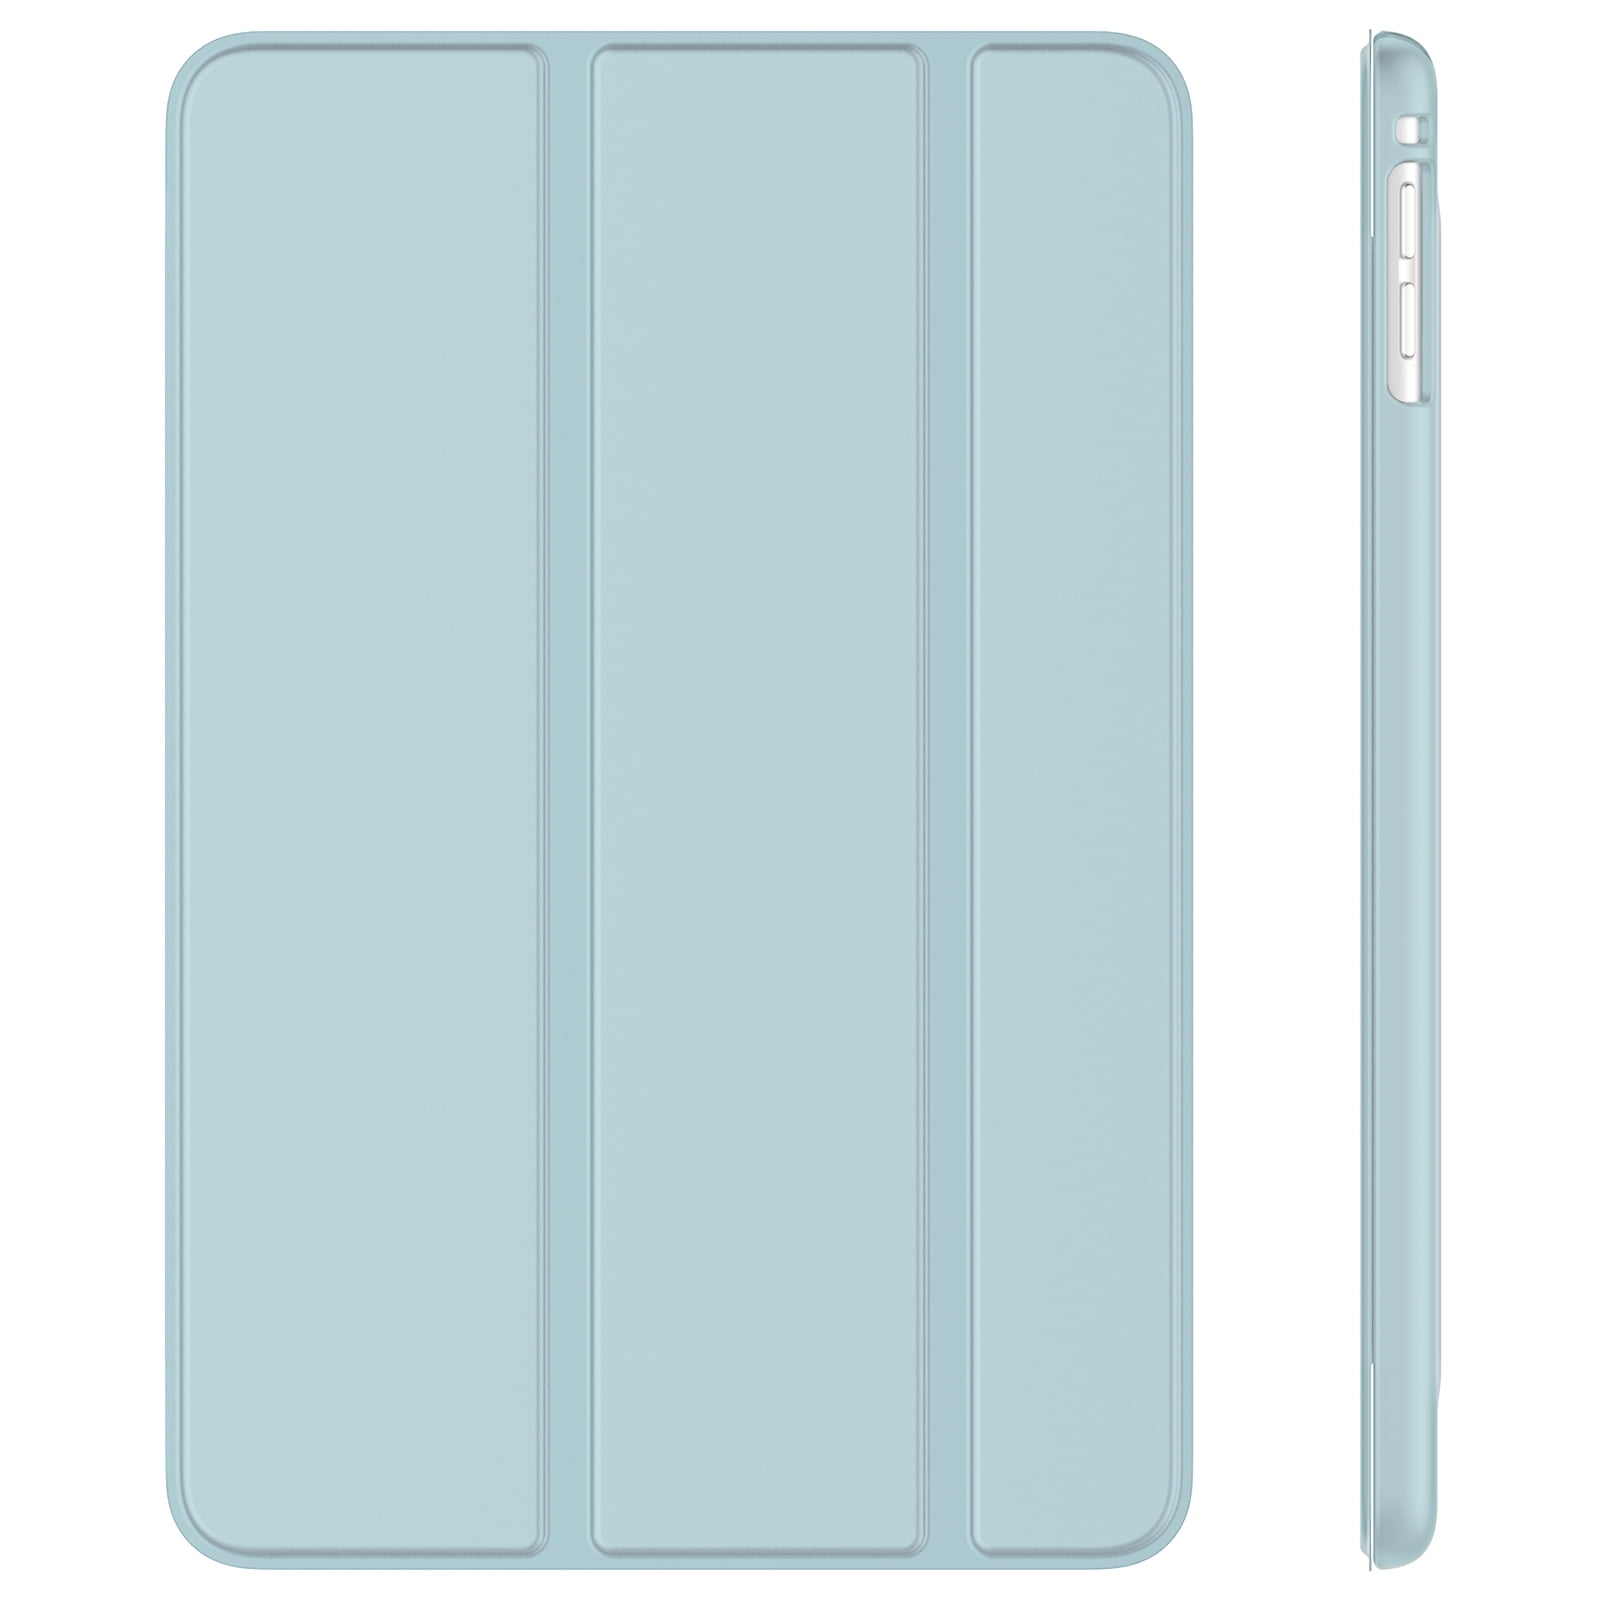 JETech Case for iPad Mini 4, Smart Cover with Auto Sleep/Wake (Black)